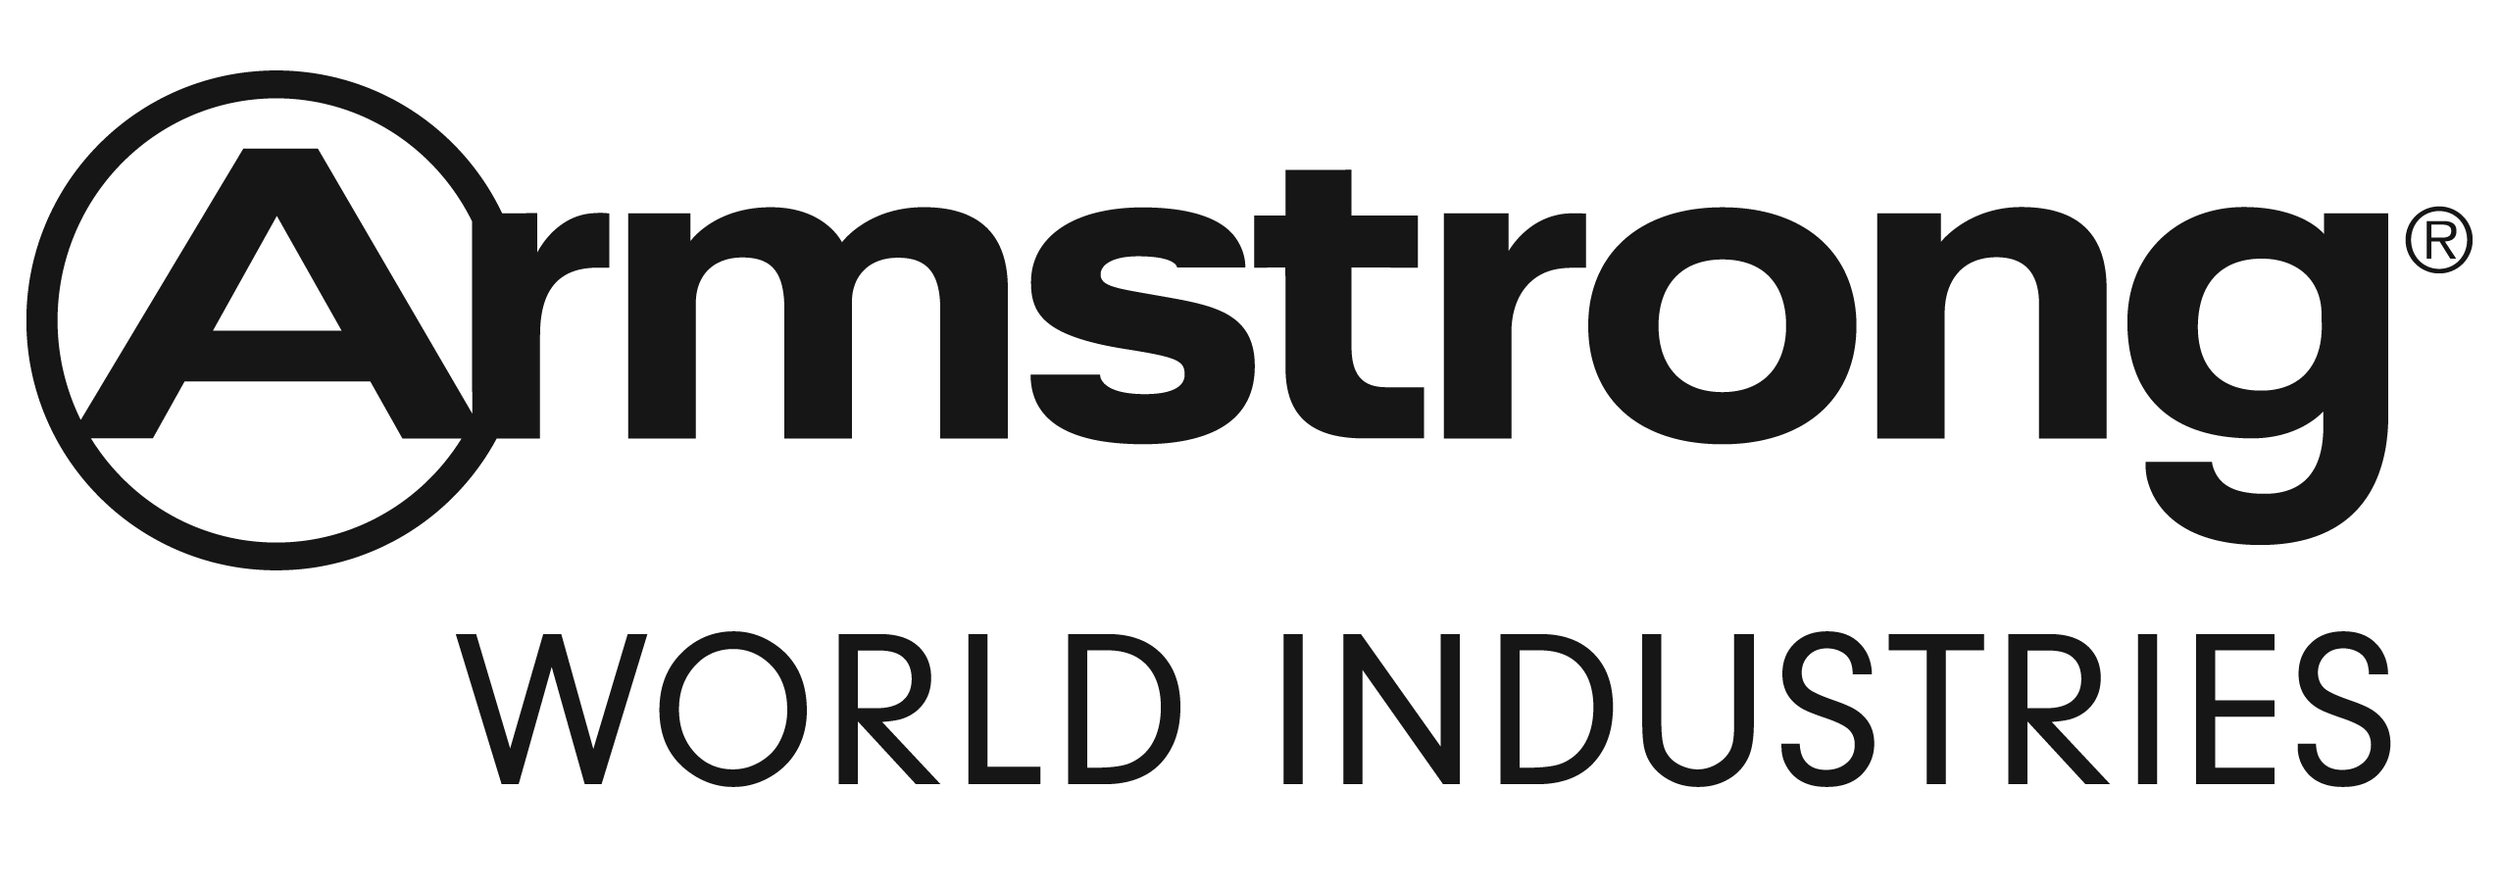 Armstrong World Industries Logo.jpg